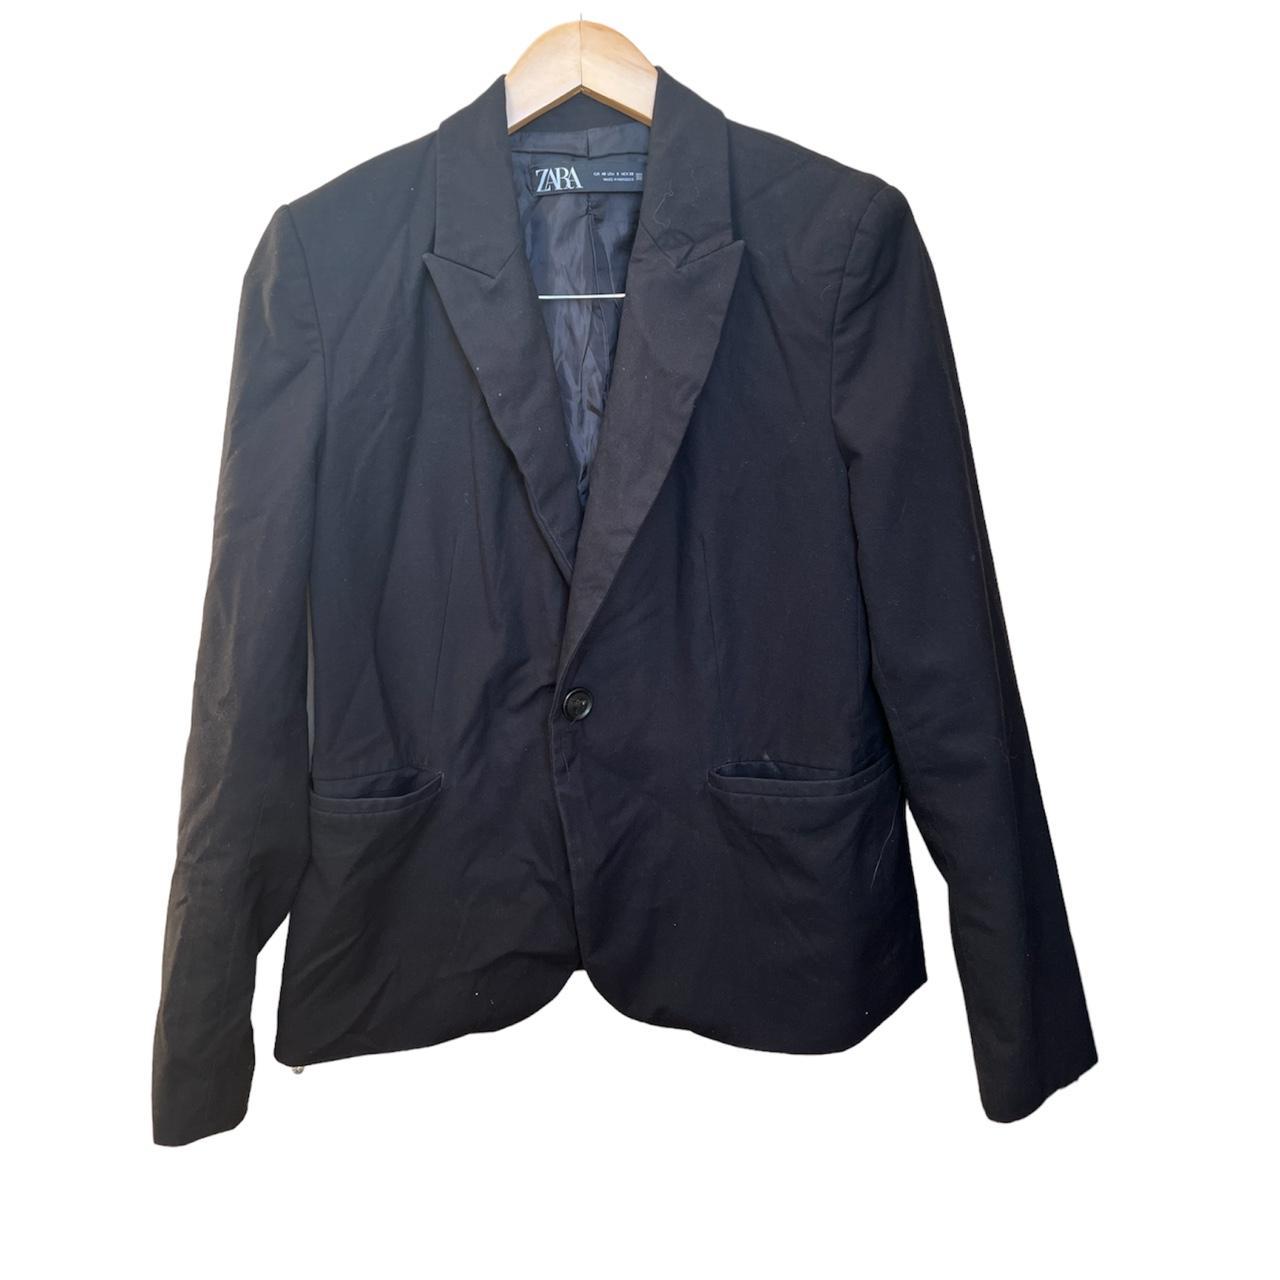 Black zara suit blazer size 12 eu40 but fits smaller... - Depop